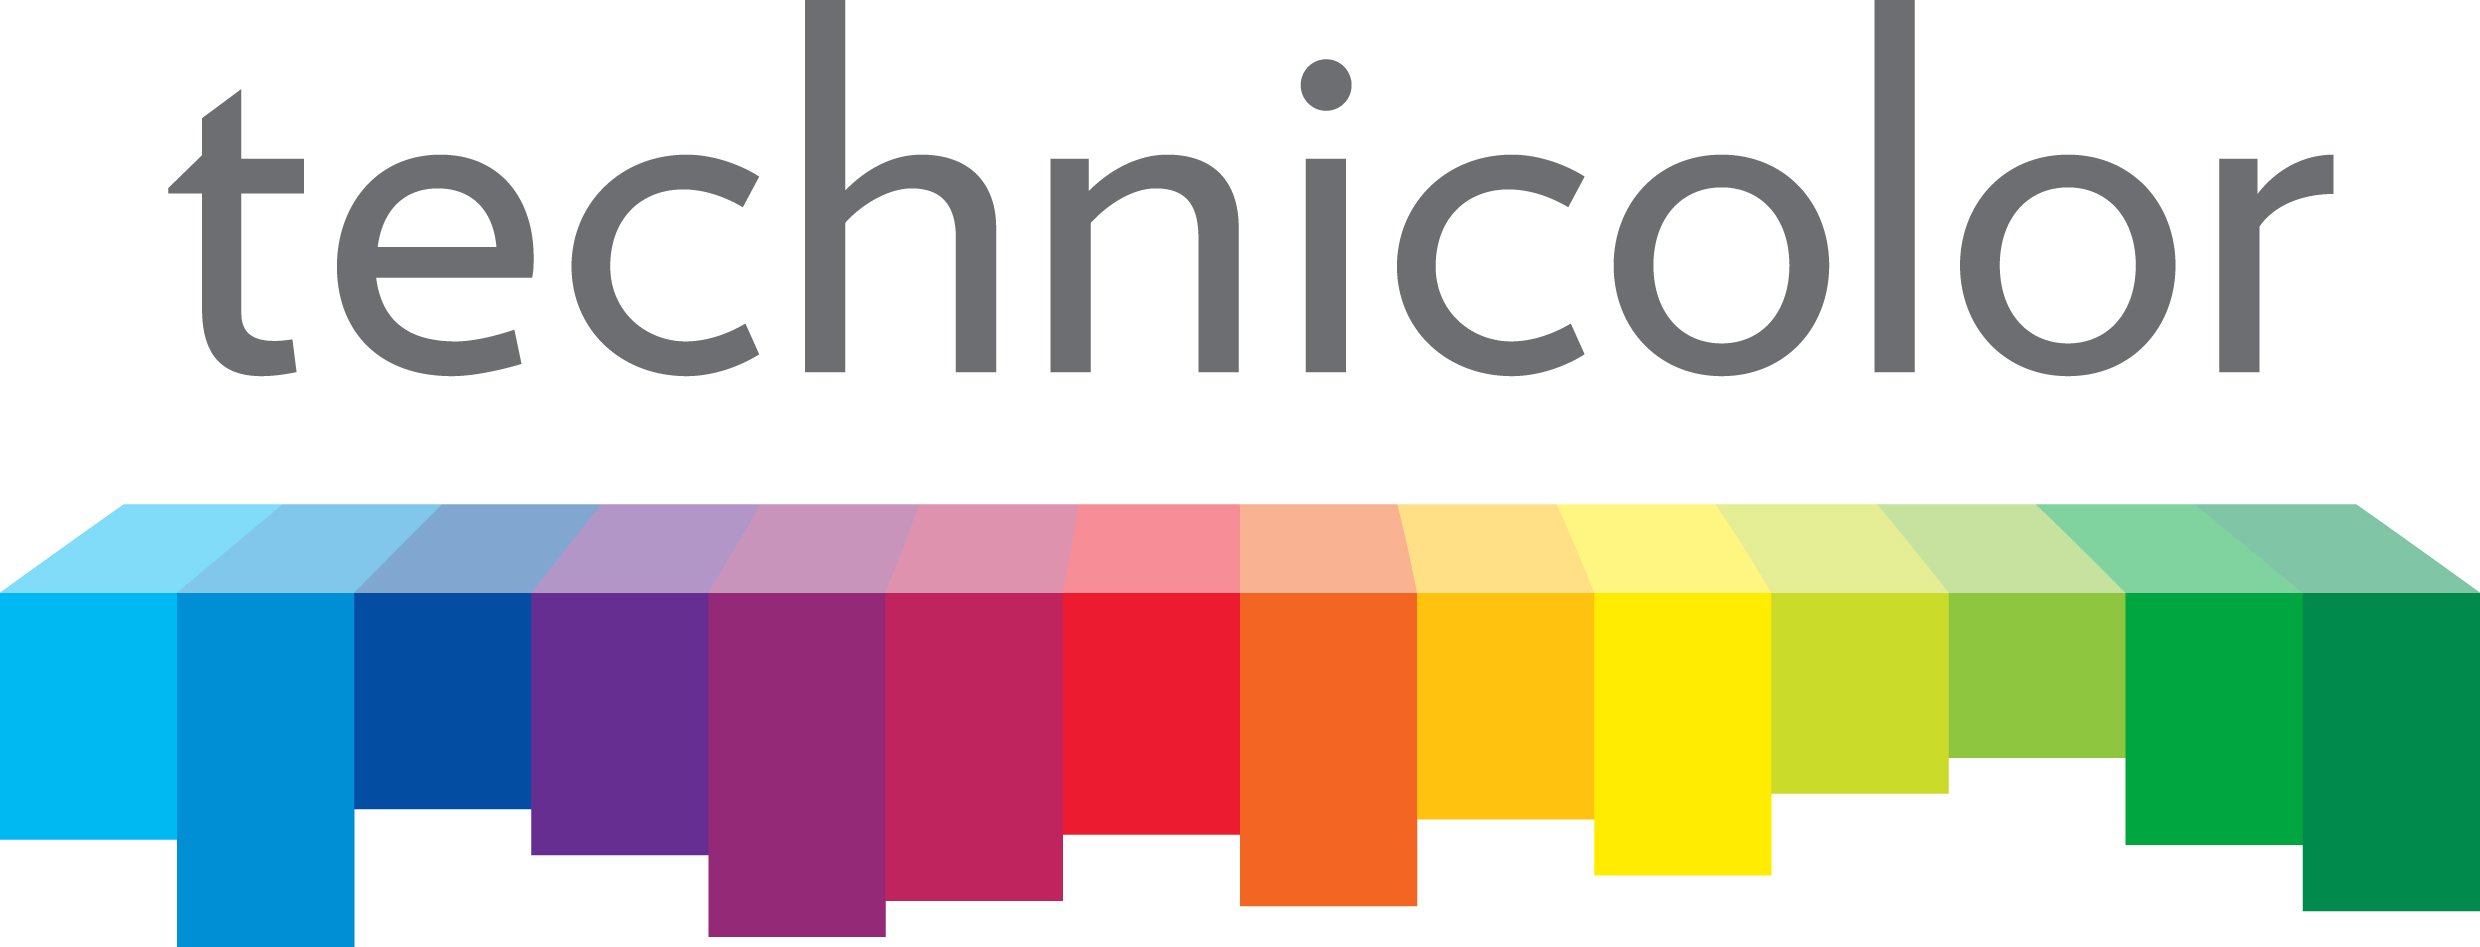 technicolour logo